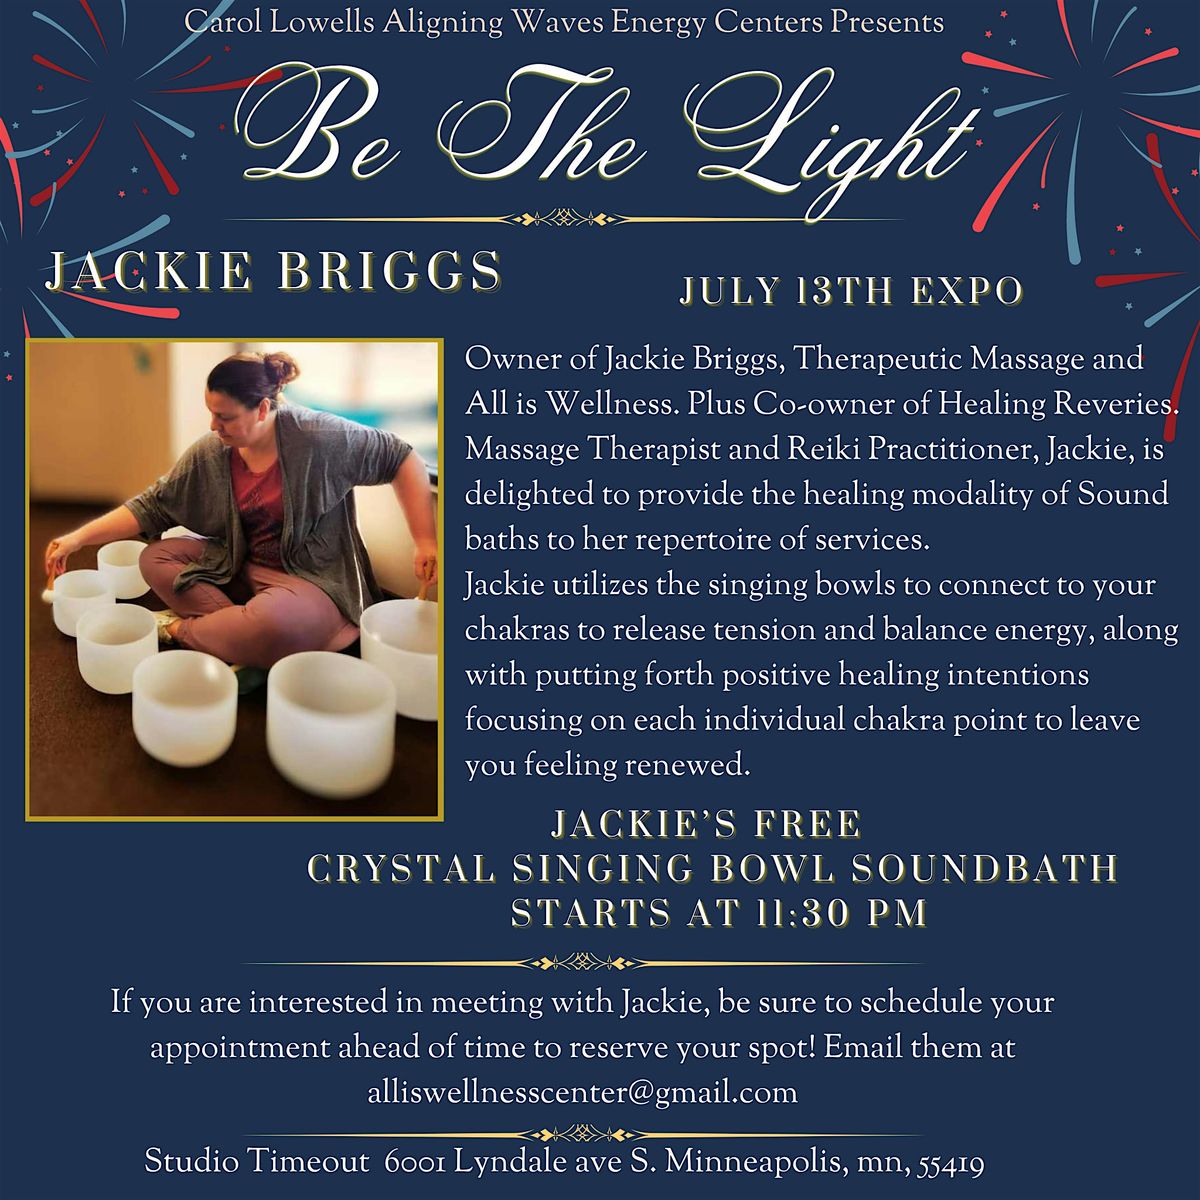 Jackie Briggs - Crystal Singing Bowl Sound Bath - Be the Light Expo